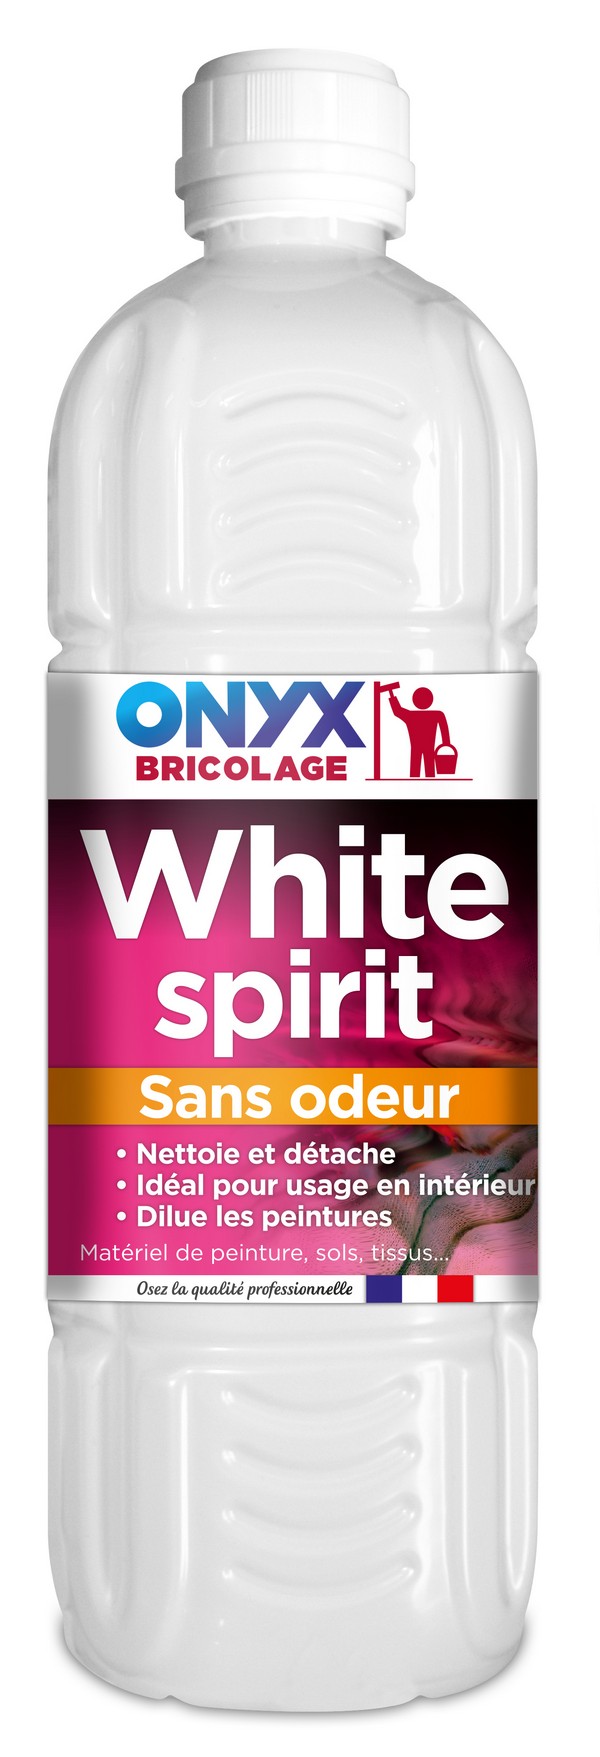 White spirit sans odeur 1l